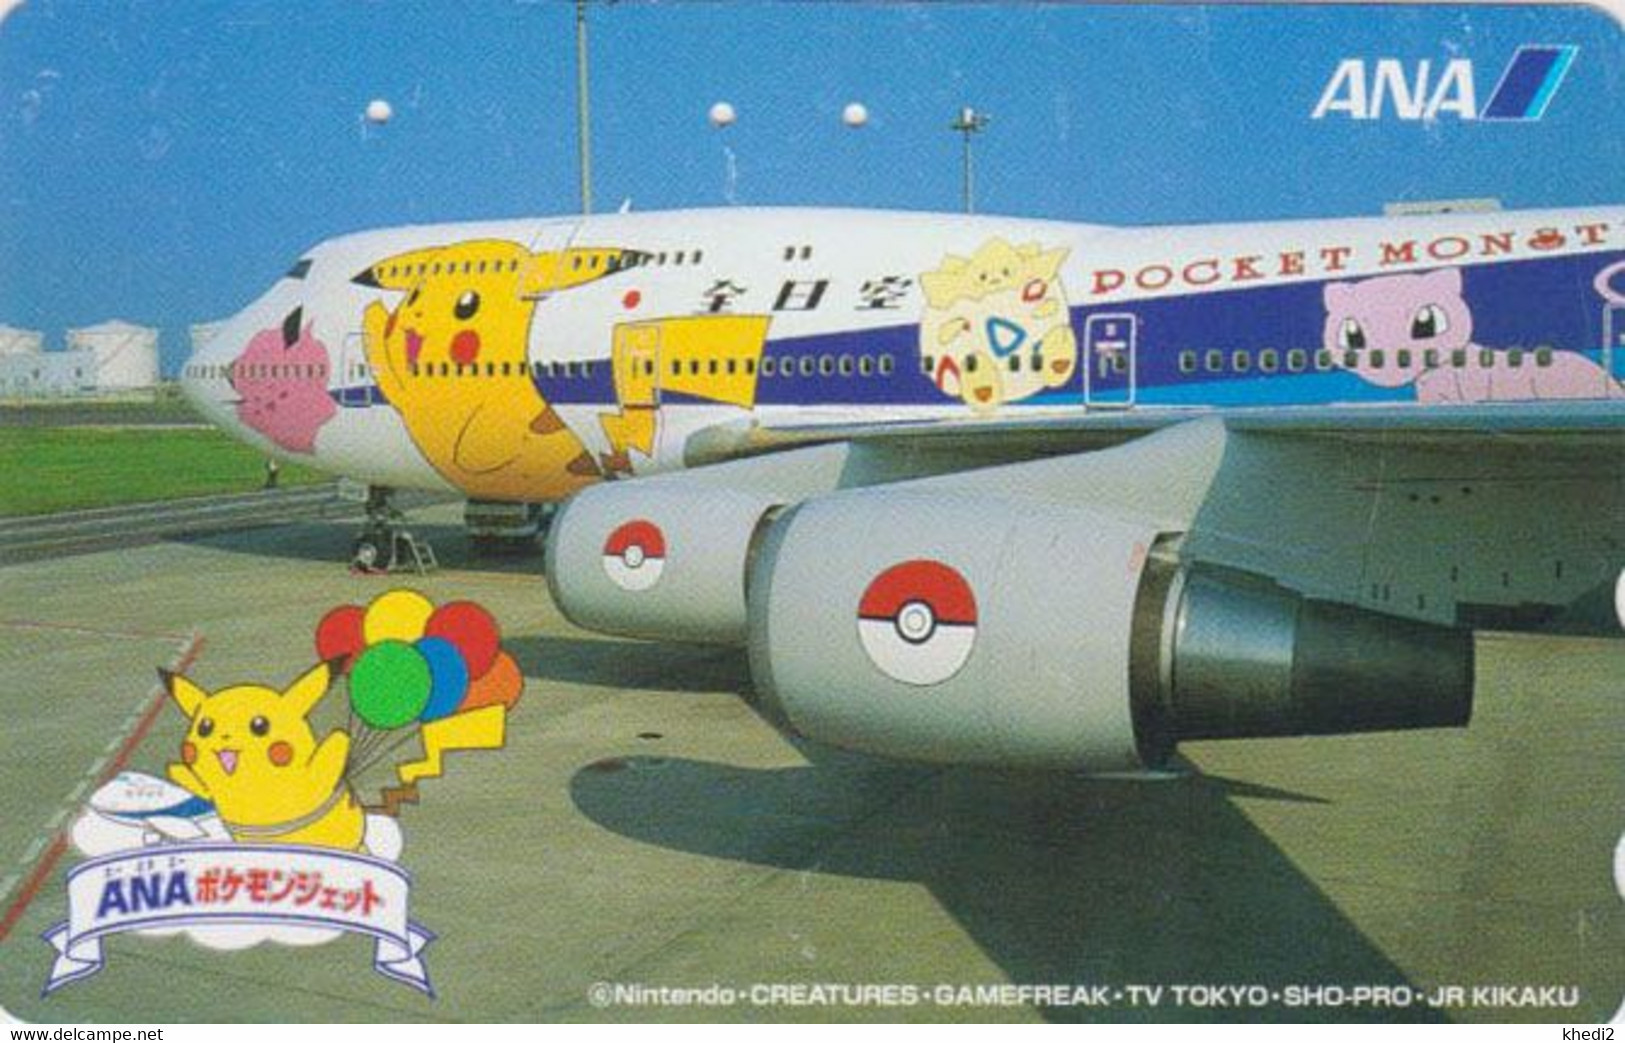 Télécarte JAPON / 110-016  - MANGA - NINTENDO POKEMON AVION ANA  - BALLOON & PLANE JAPAN Phonecard  - 19793 - Aviones